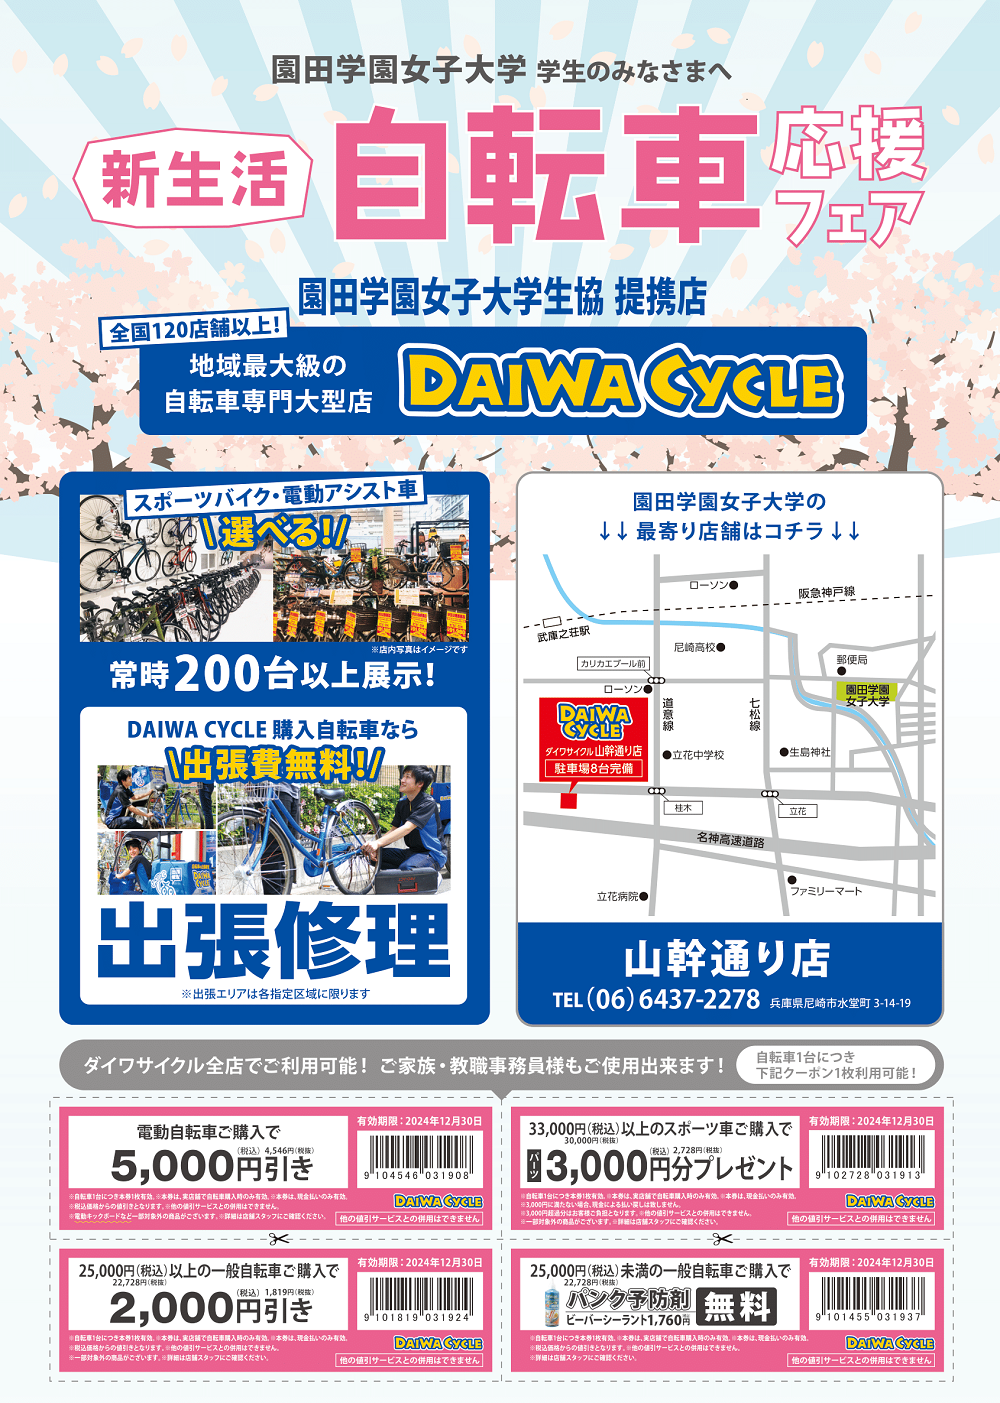 daiwa24-1.png